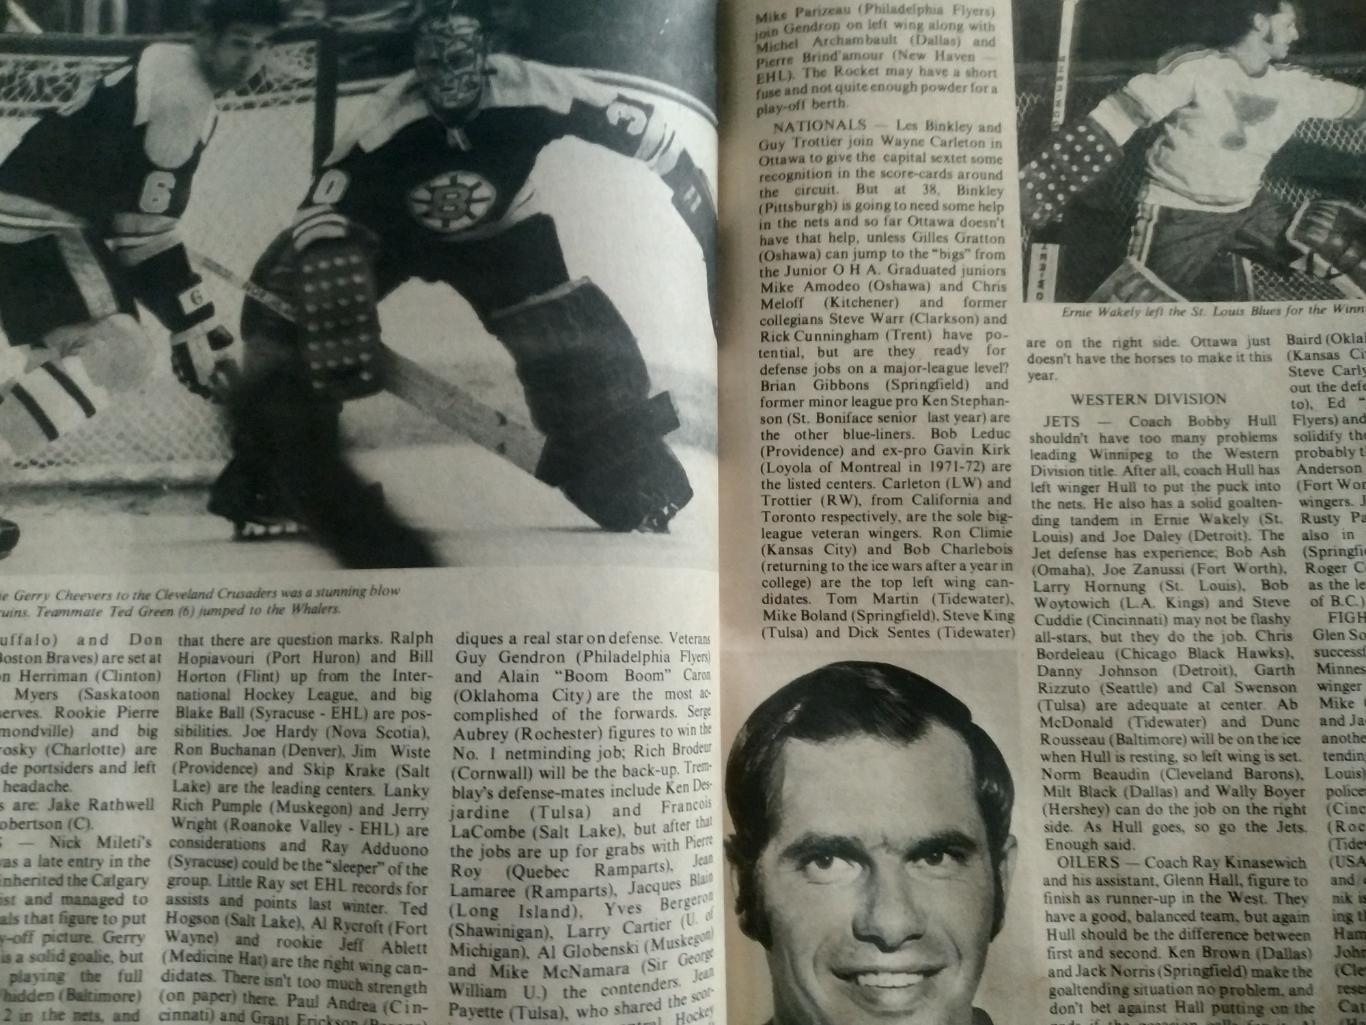 ЖУРНАЛ НХЛ СПОРТ СПЕШИАЛ ХОККЕЙ FEB 1973 NHL SPORTS SPECIAL HOCKEY 7